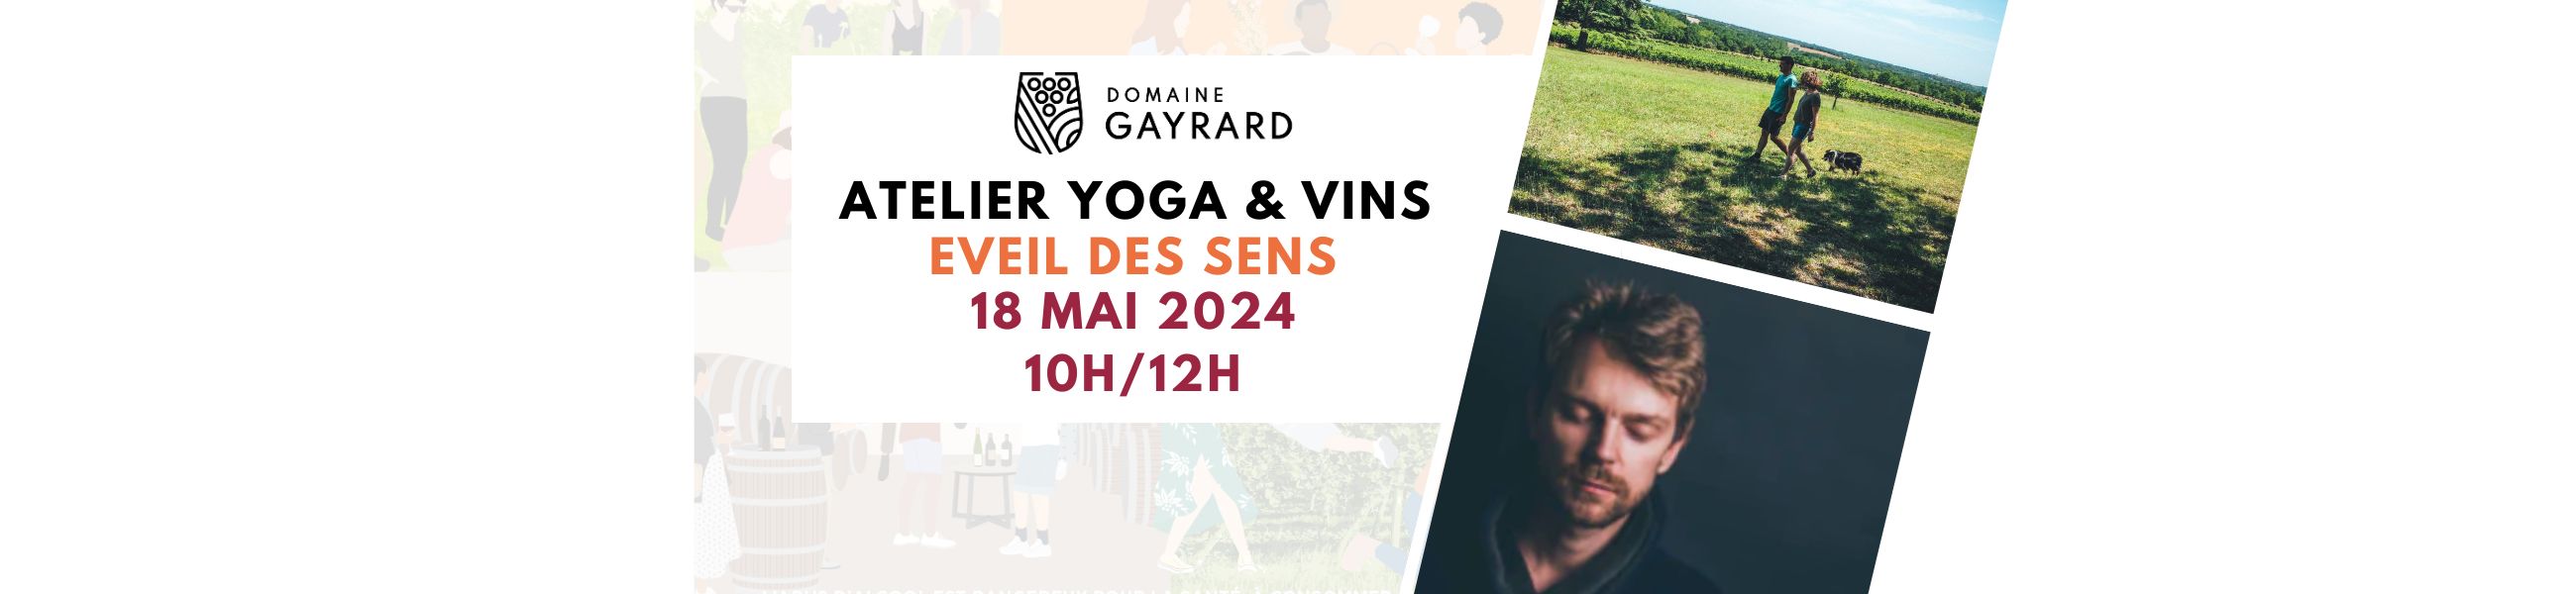 Yoga et vins au Domaine Gayrard